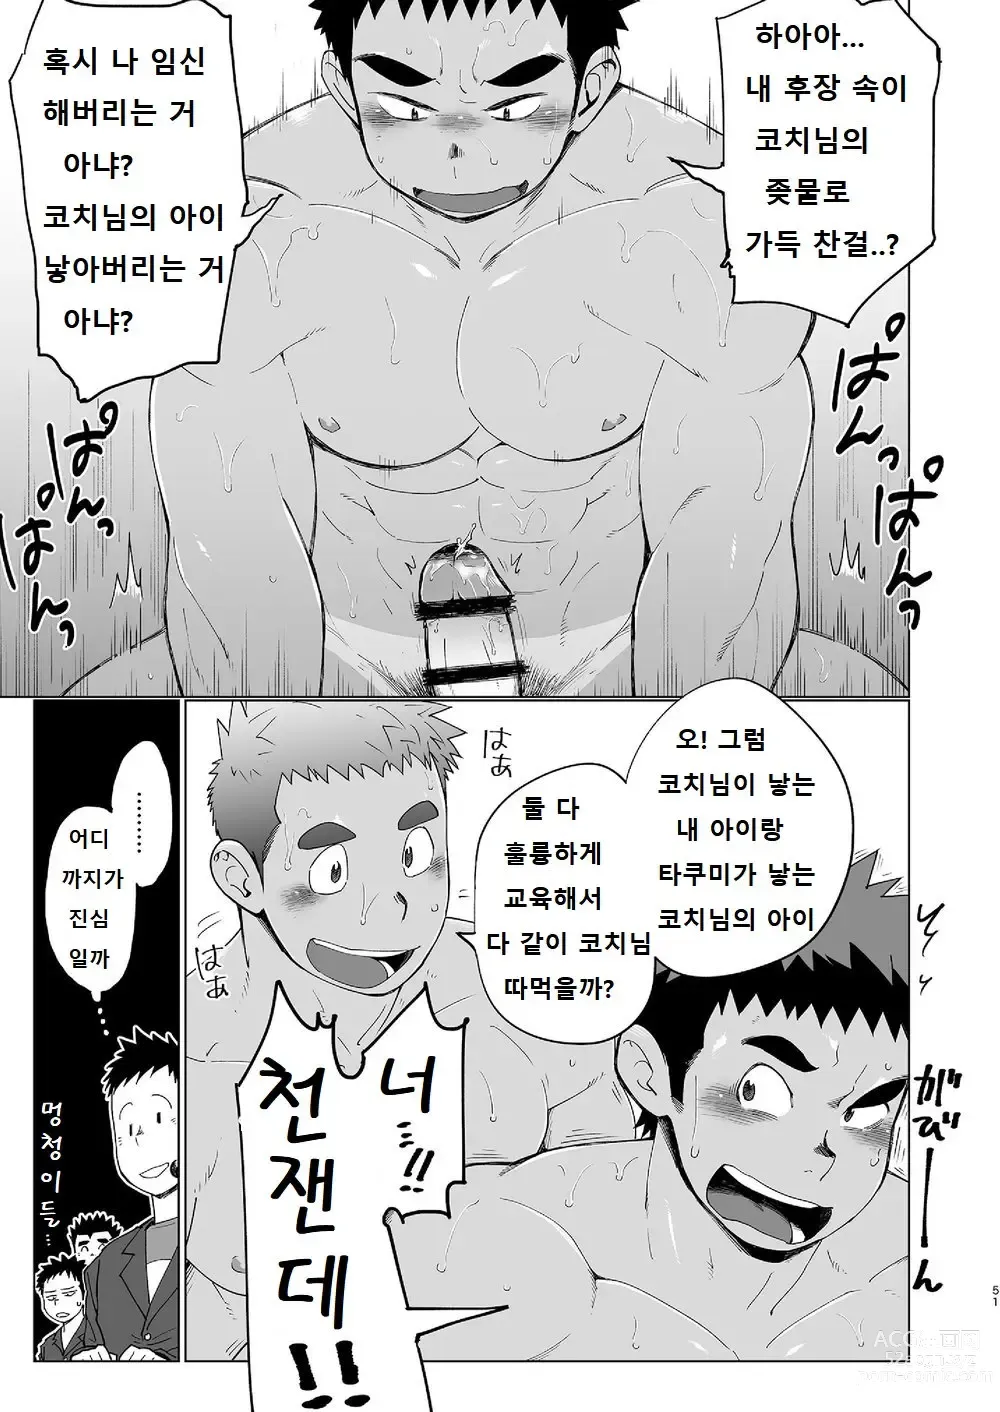 Page 50 of doujinshi 코치가 너무 꼴릿해서 수영 따위 할 때가 아닌 걸